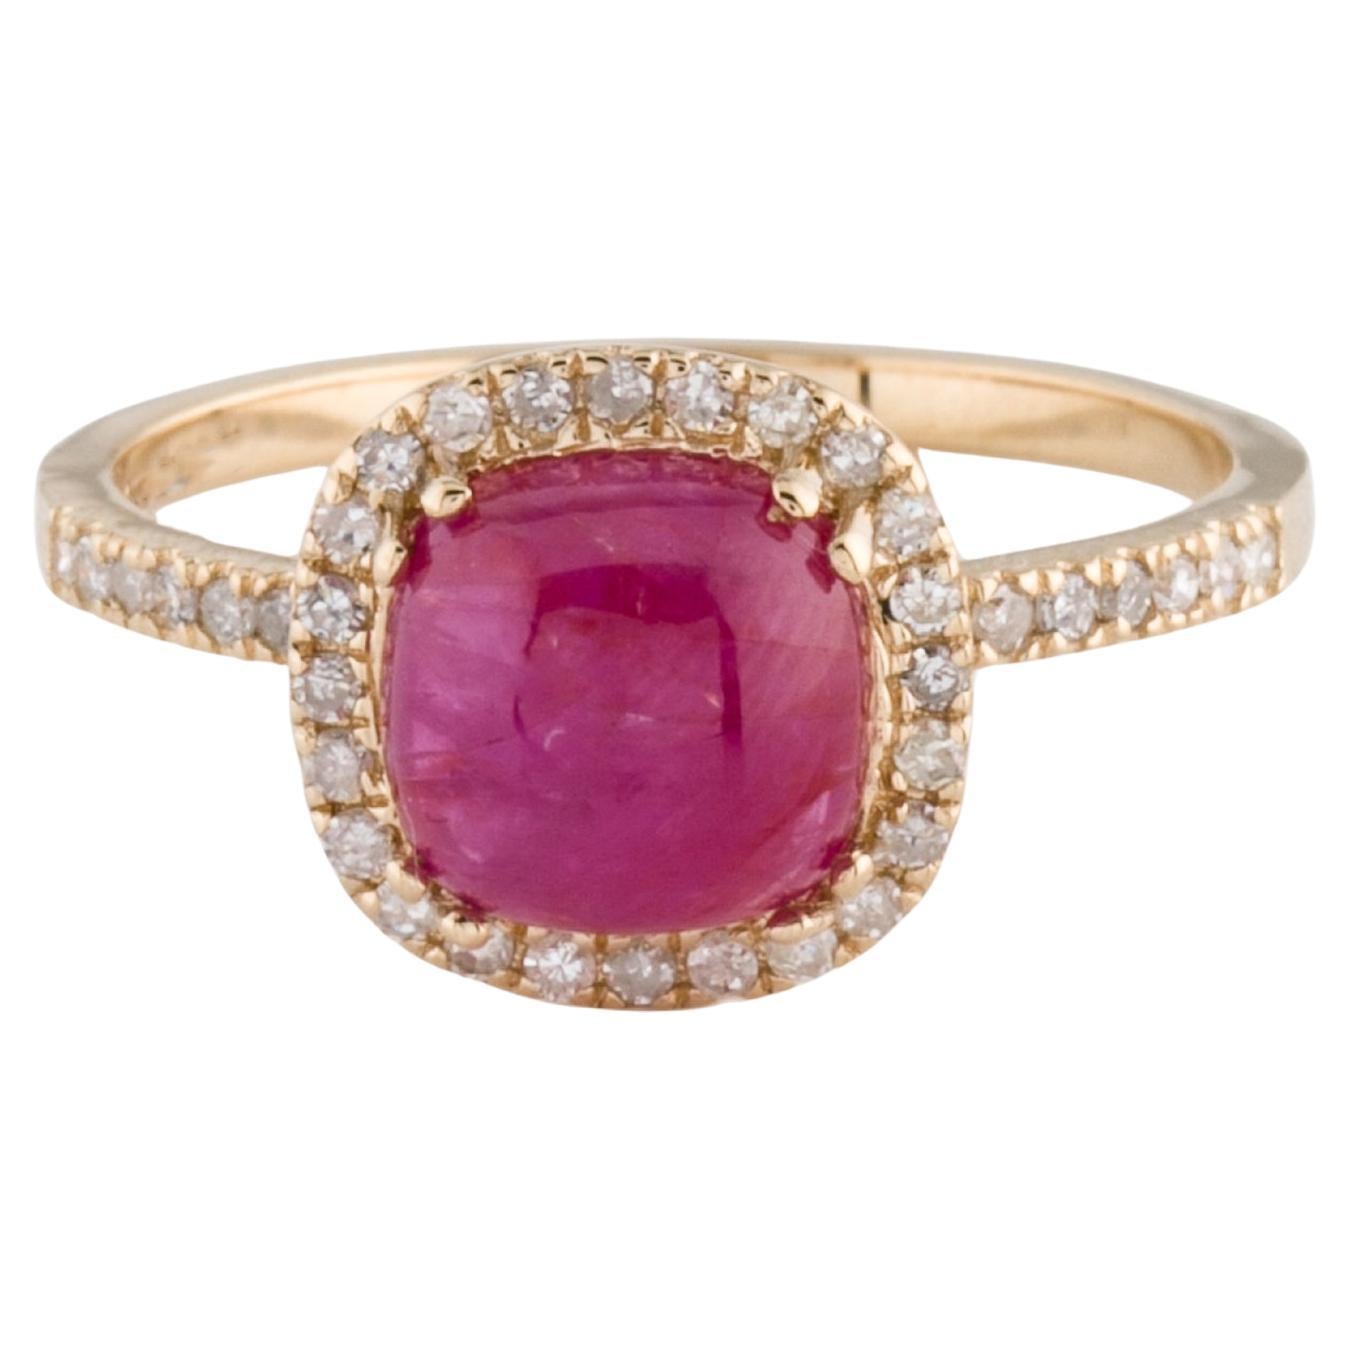 Elegant 14K Ruby & Diamond Cocktail Ring - Size 8 - Luxurious Gemstone Jewelry For Sale